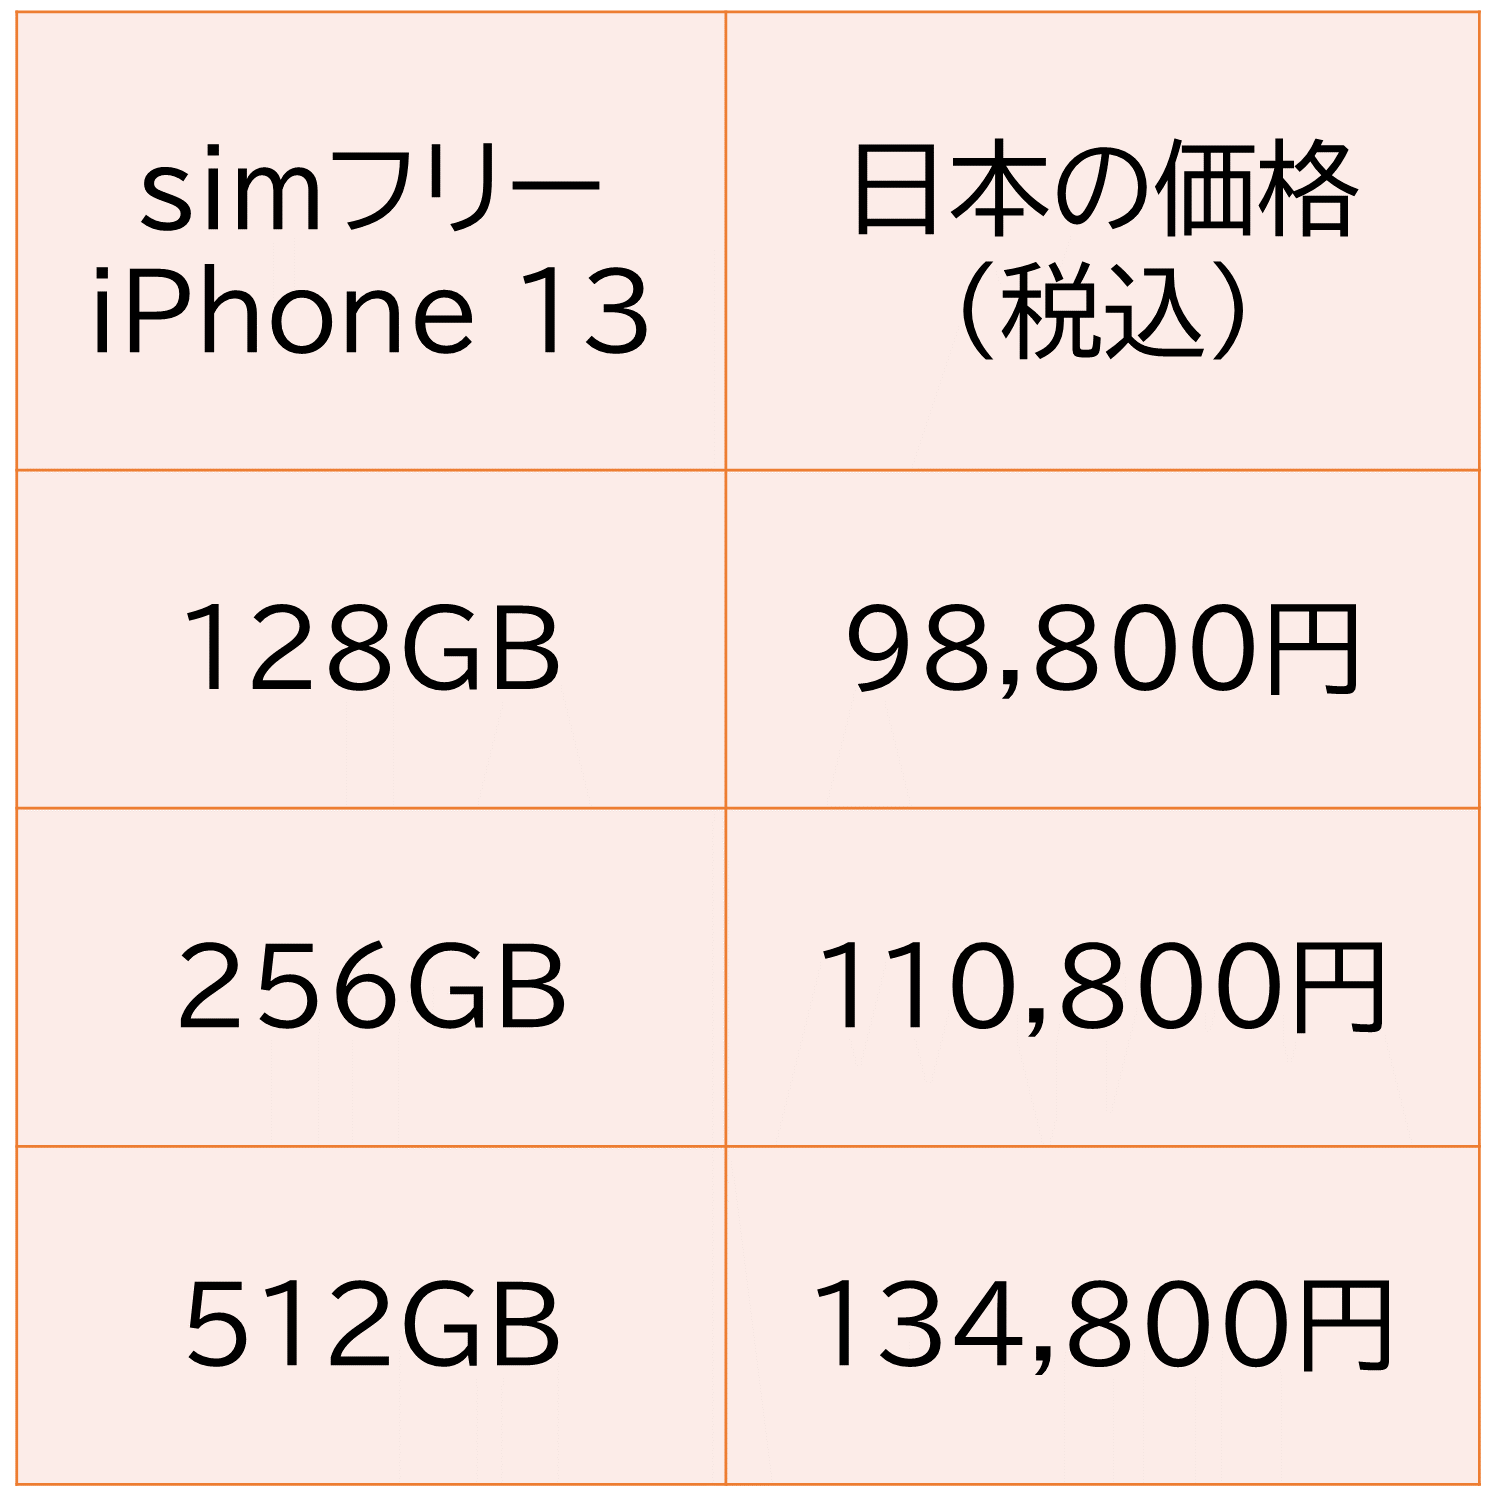 simフリーiPhone 13 第三世代の販売価格